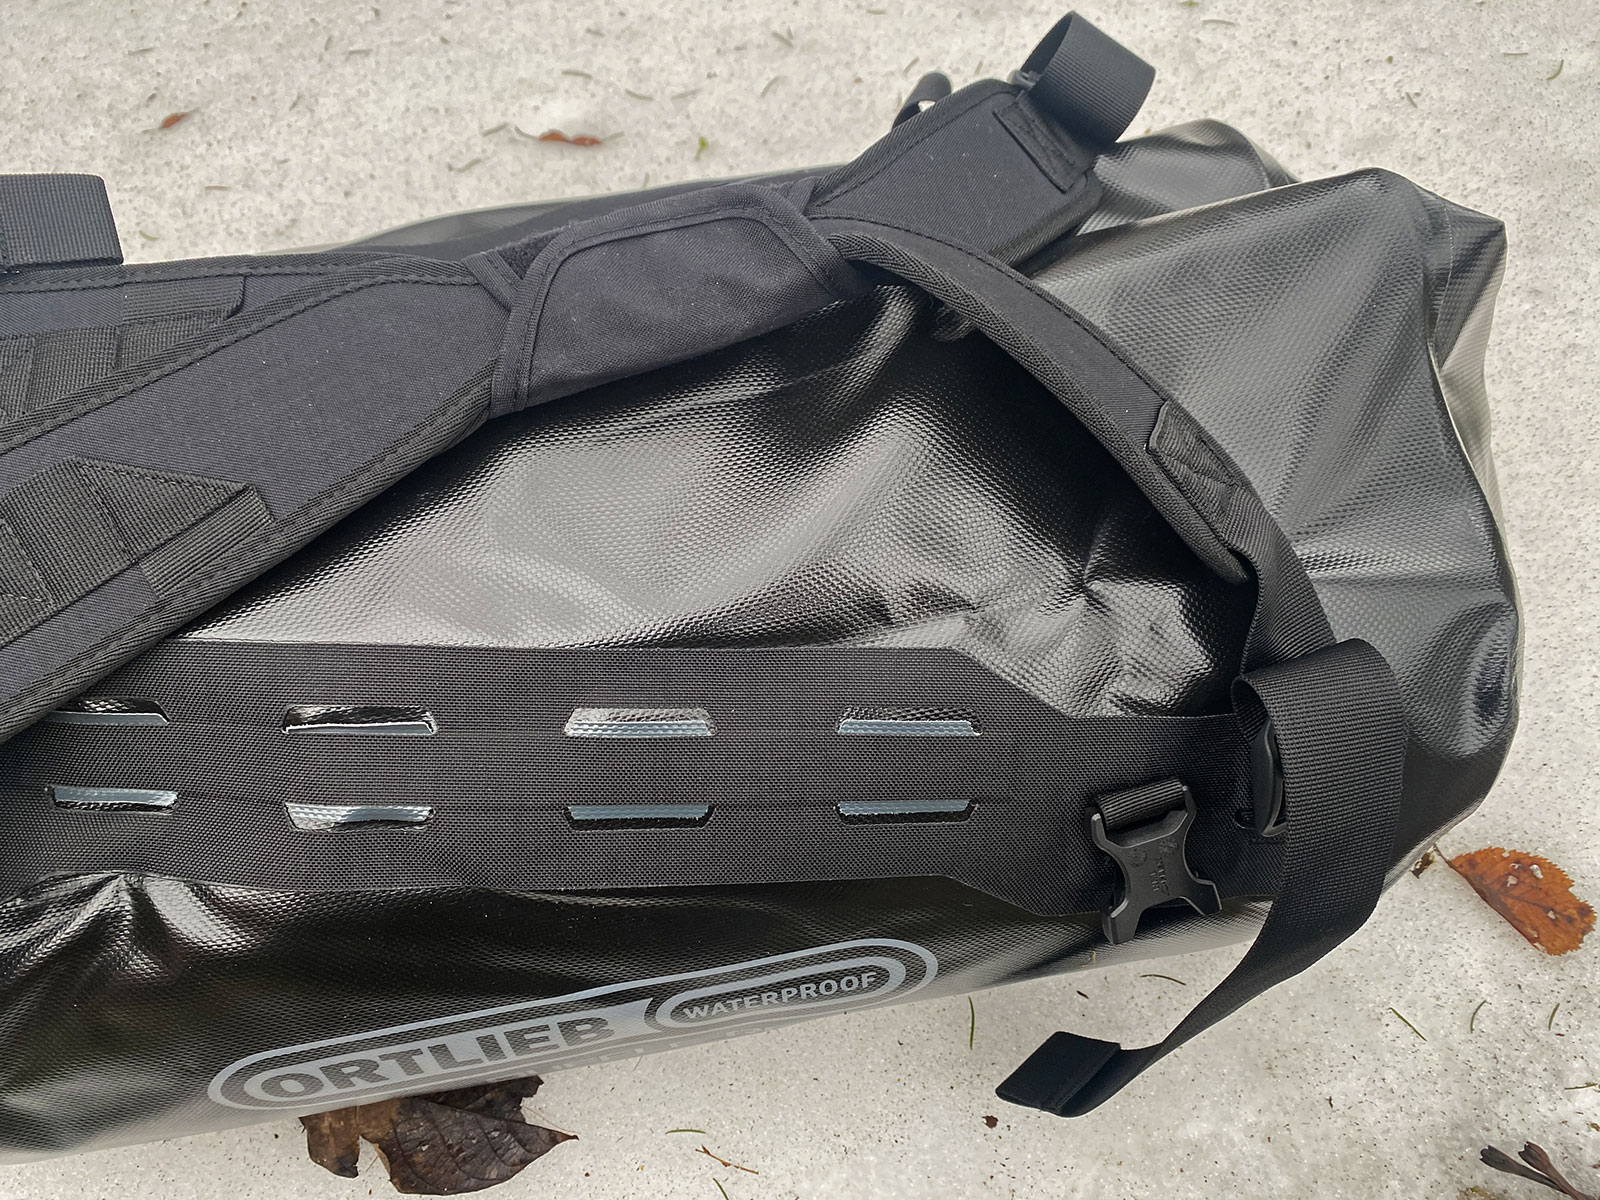 Ortlieb Duffle RC 49L Review: waterproof backpack dufflebag,straps detail